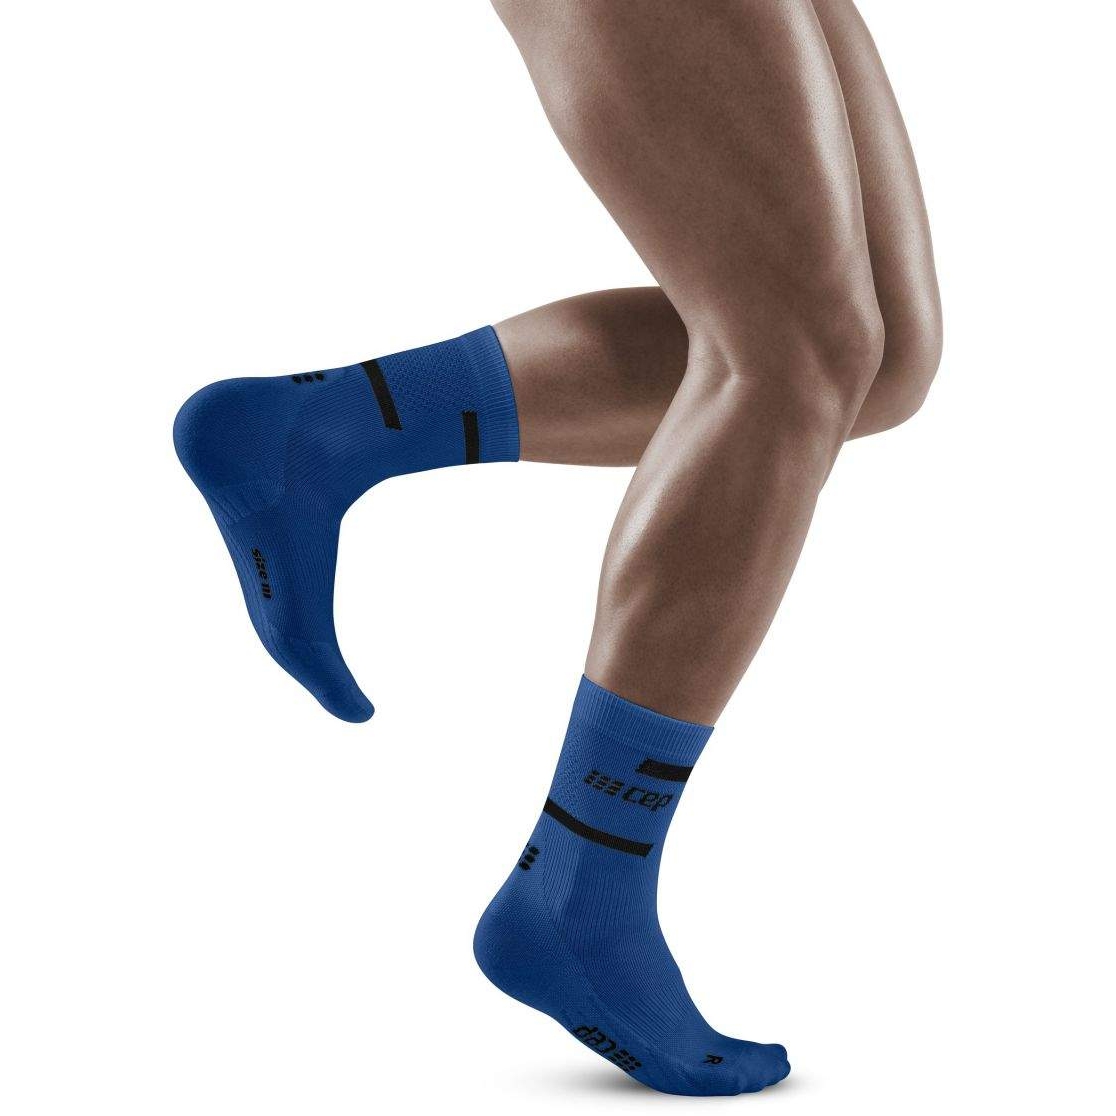 https://images.bike24.com/i/mb/80/d3/4e/cep-the-run-mid-cut-compression-socks-v4-blue-1-1553627.jpg